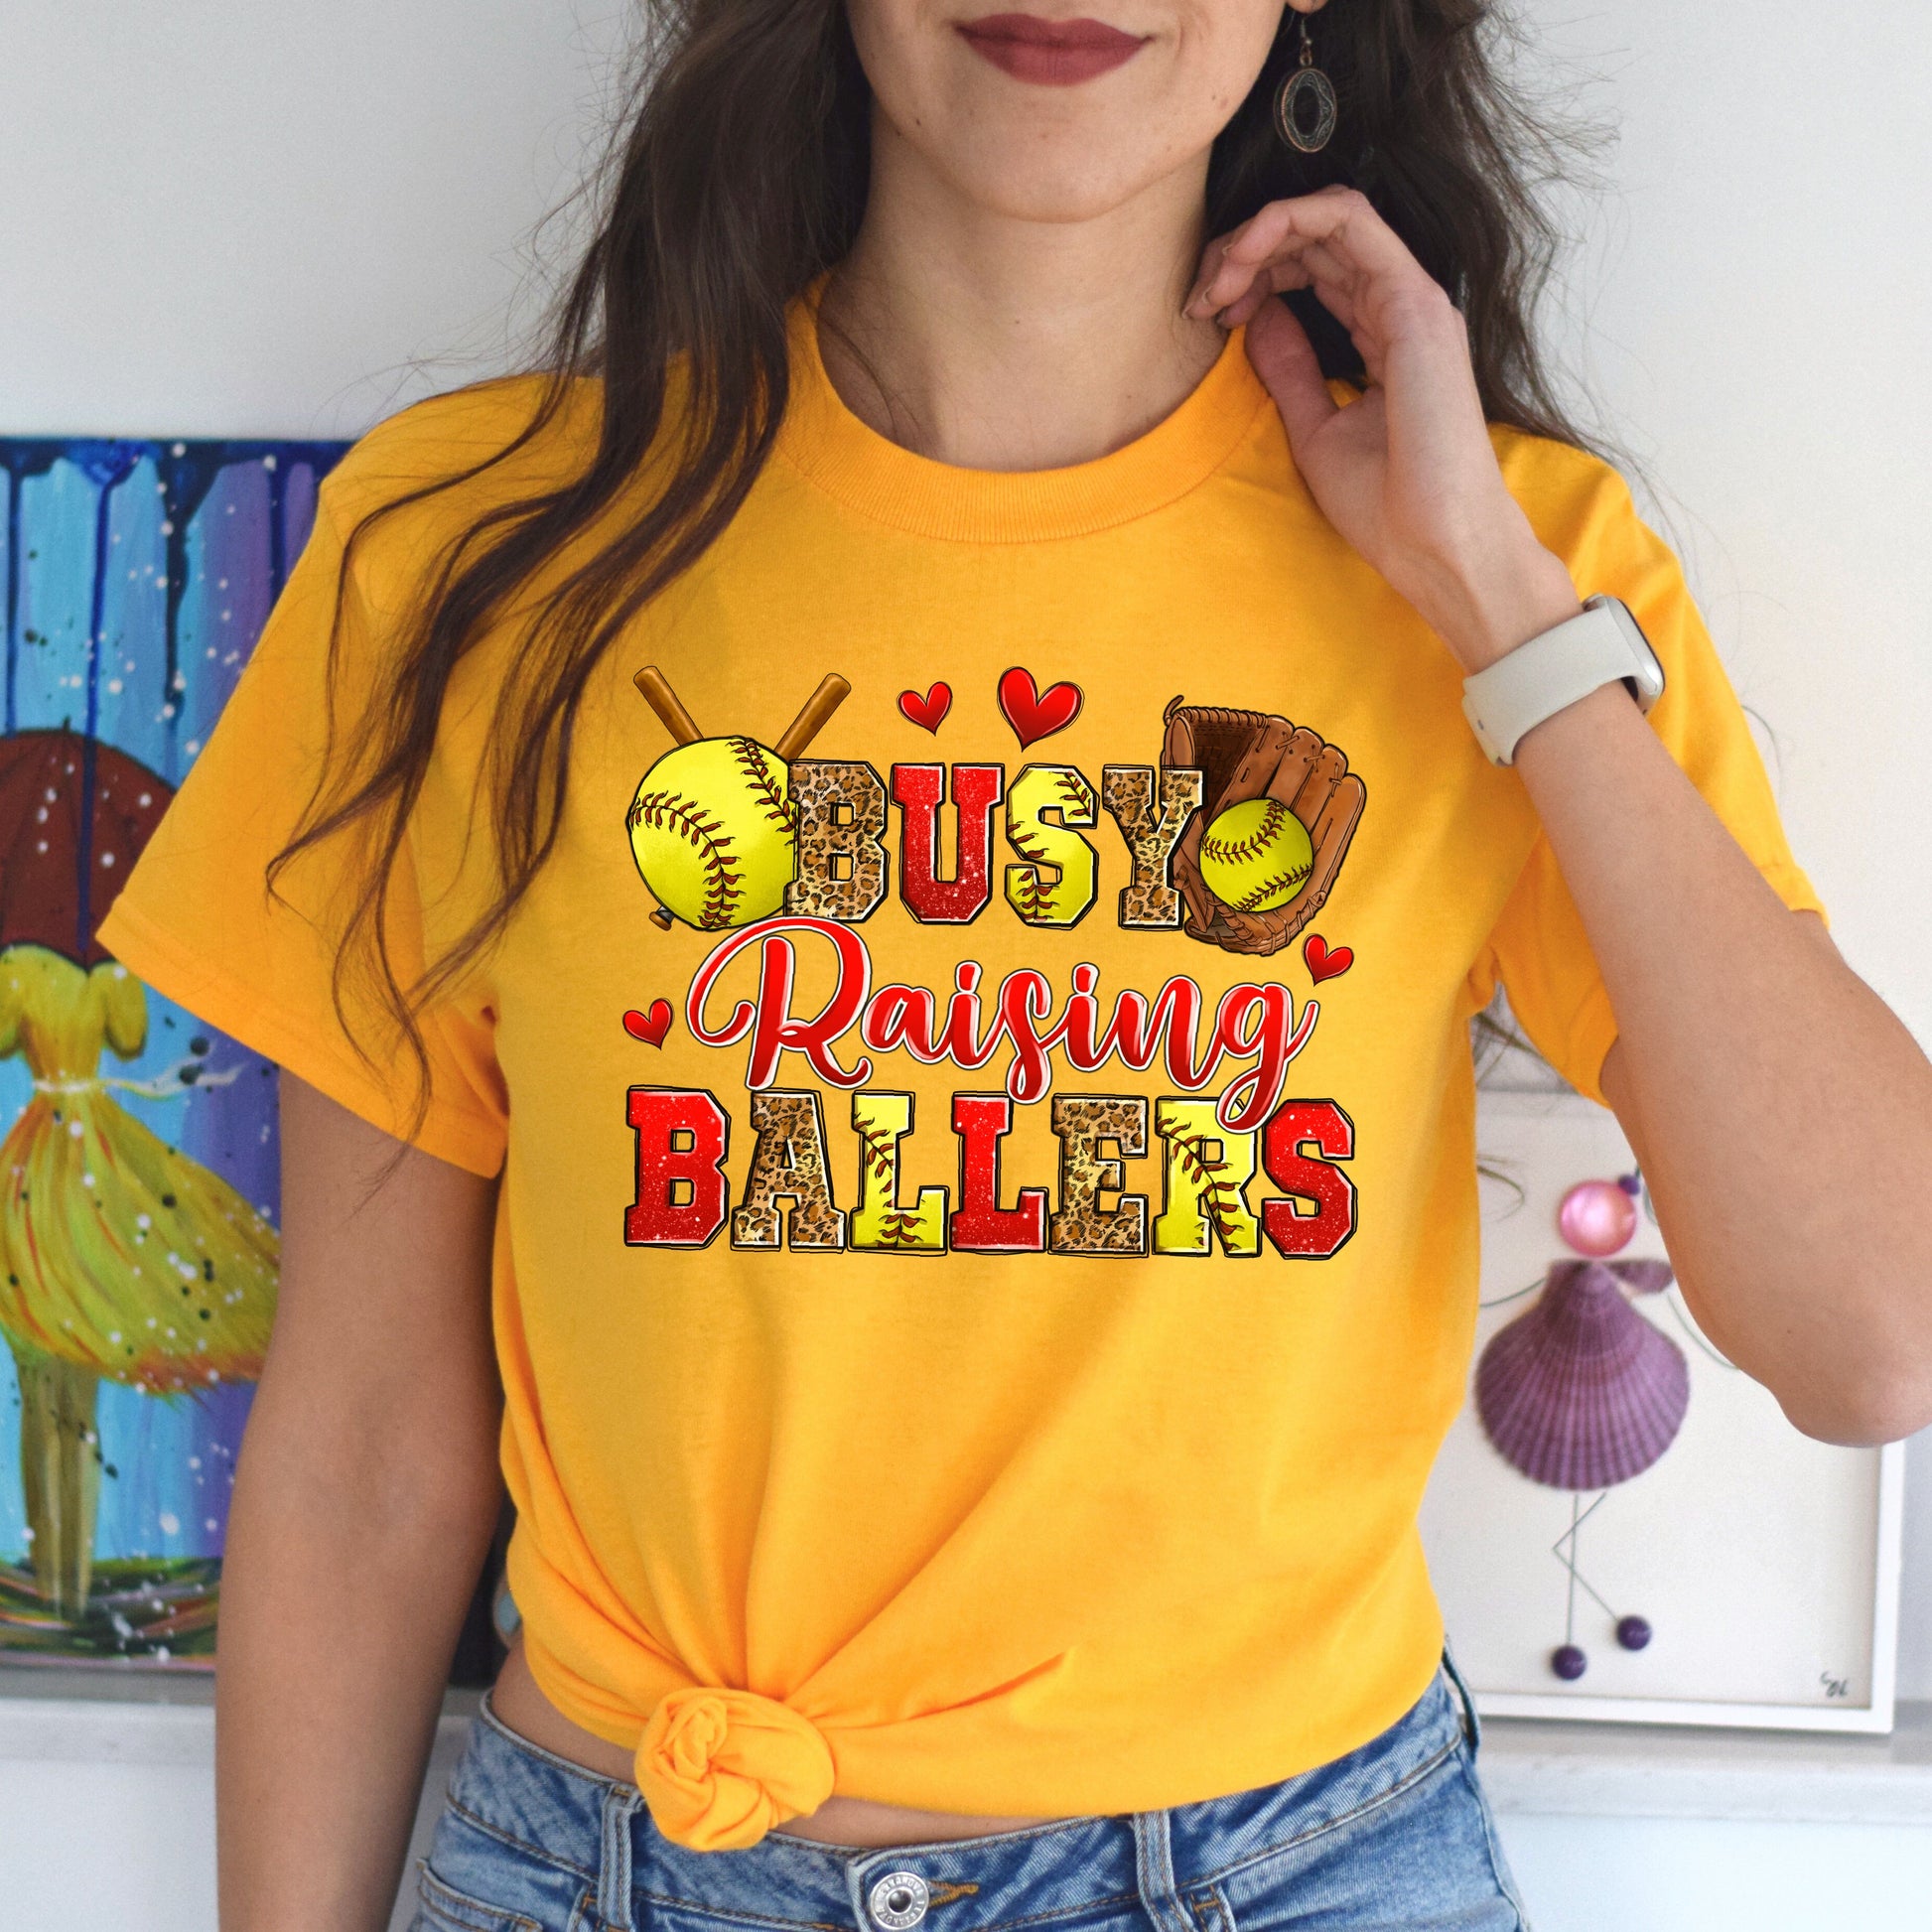 Softball - busy raising ballers Unisex t-shirt softball mom tee gift-Family-Gift-Planet